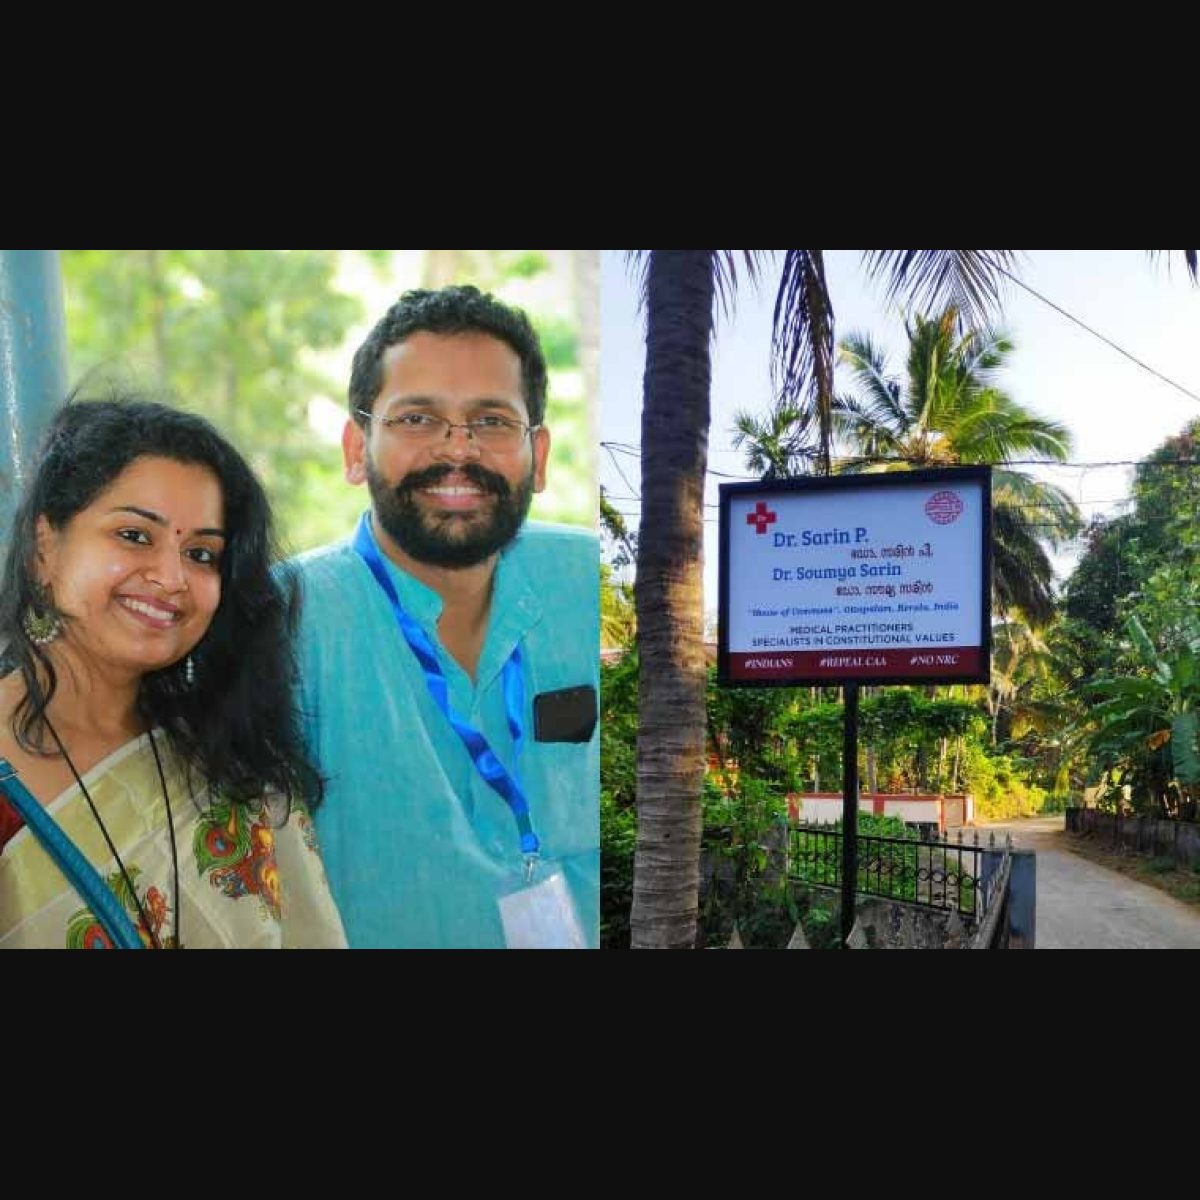 Unique anti-CAA protest Kerala doctor couples signboard triggers debate